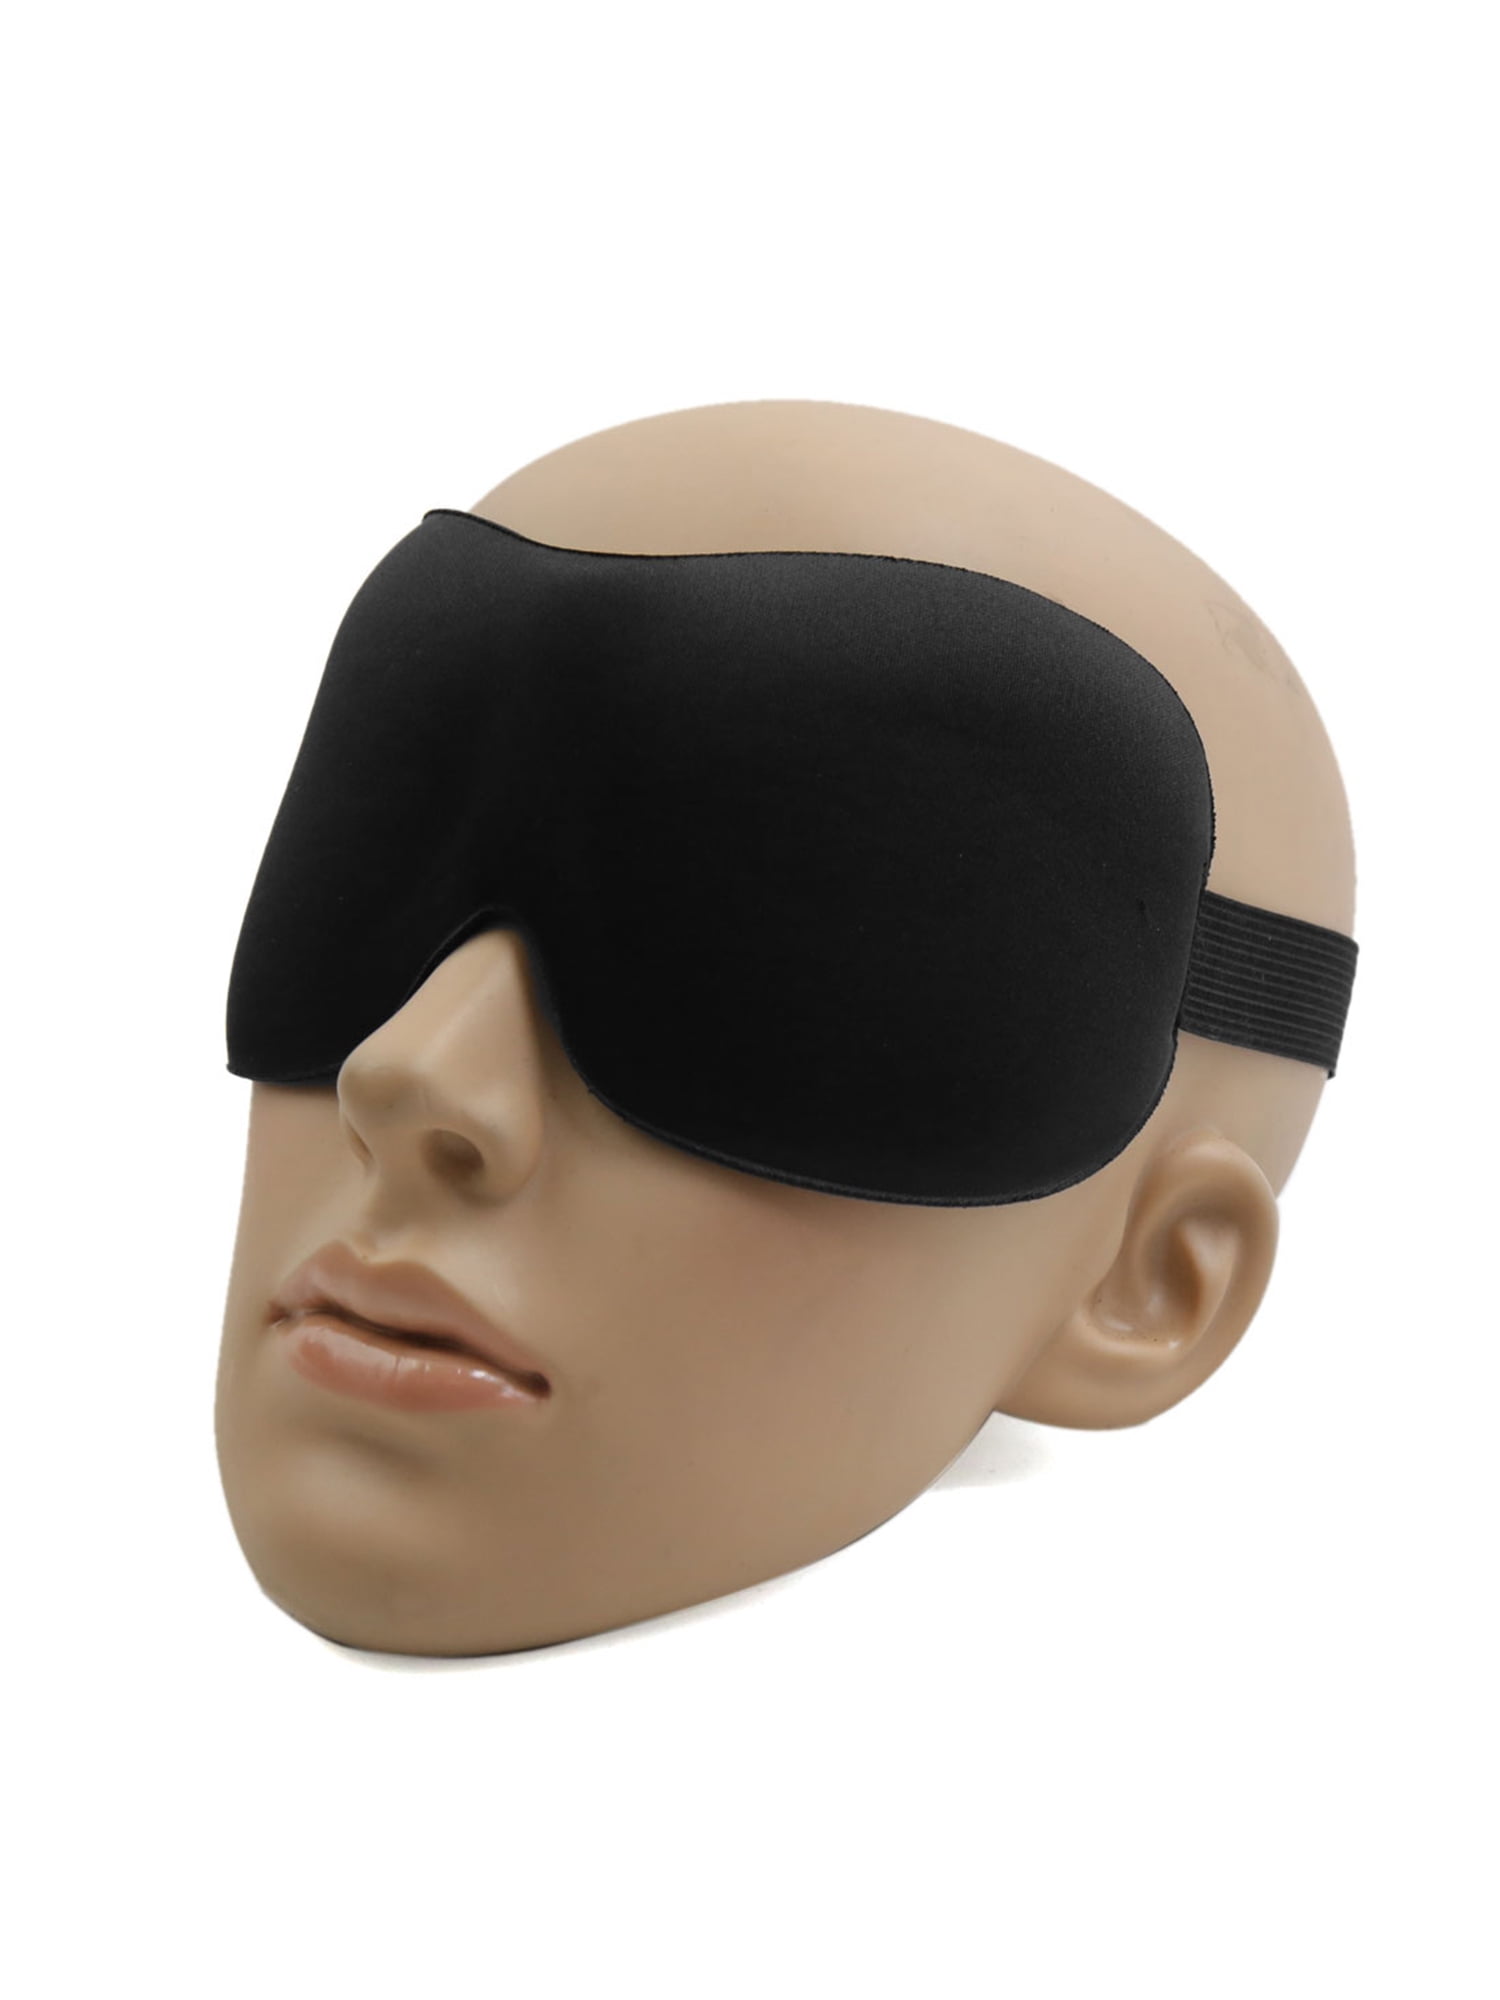 New 3D Eye Sleep Night Travel Mask Sponge Soft Blindfold Aid Shade Cover Blinder 